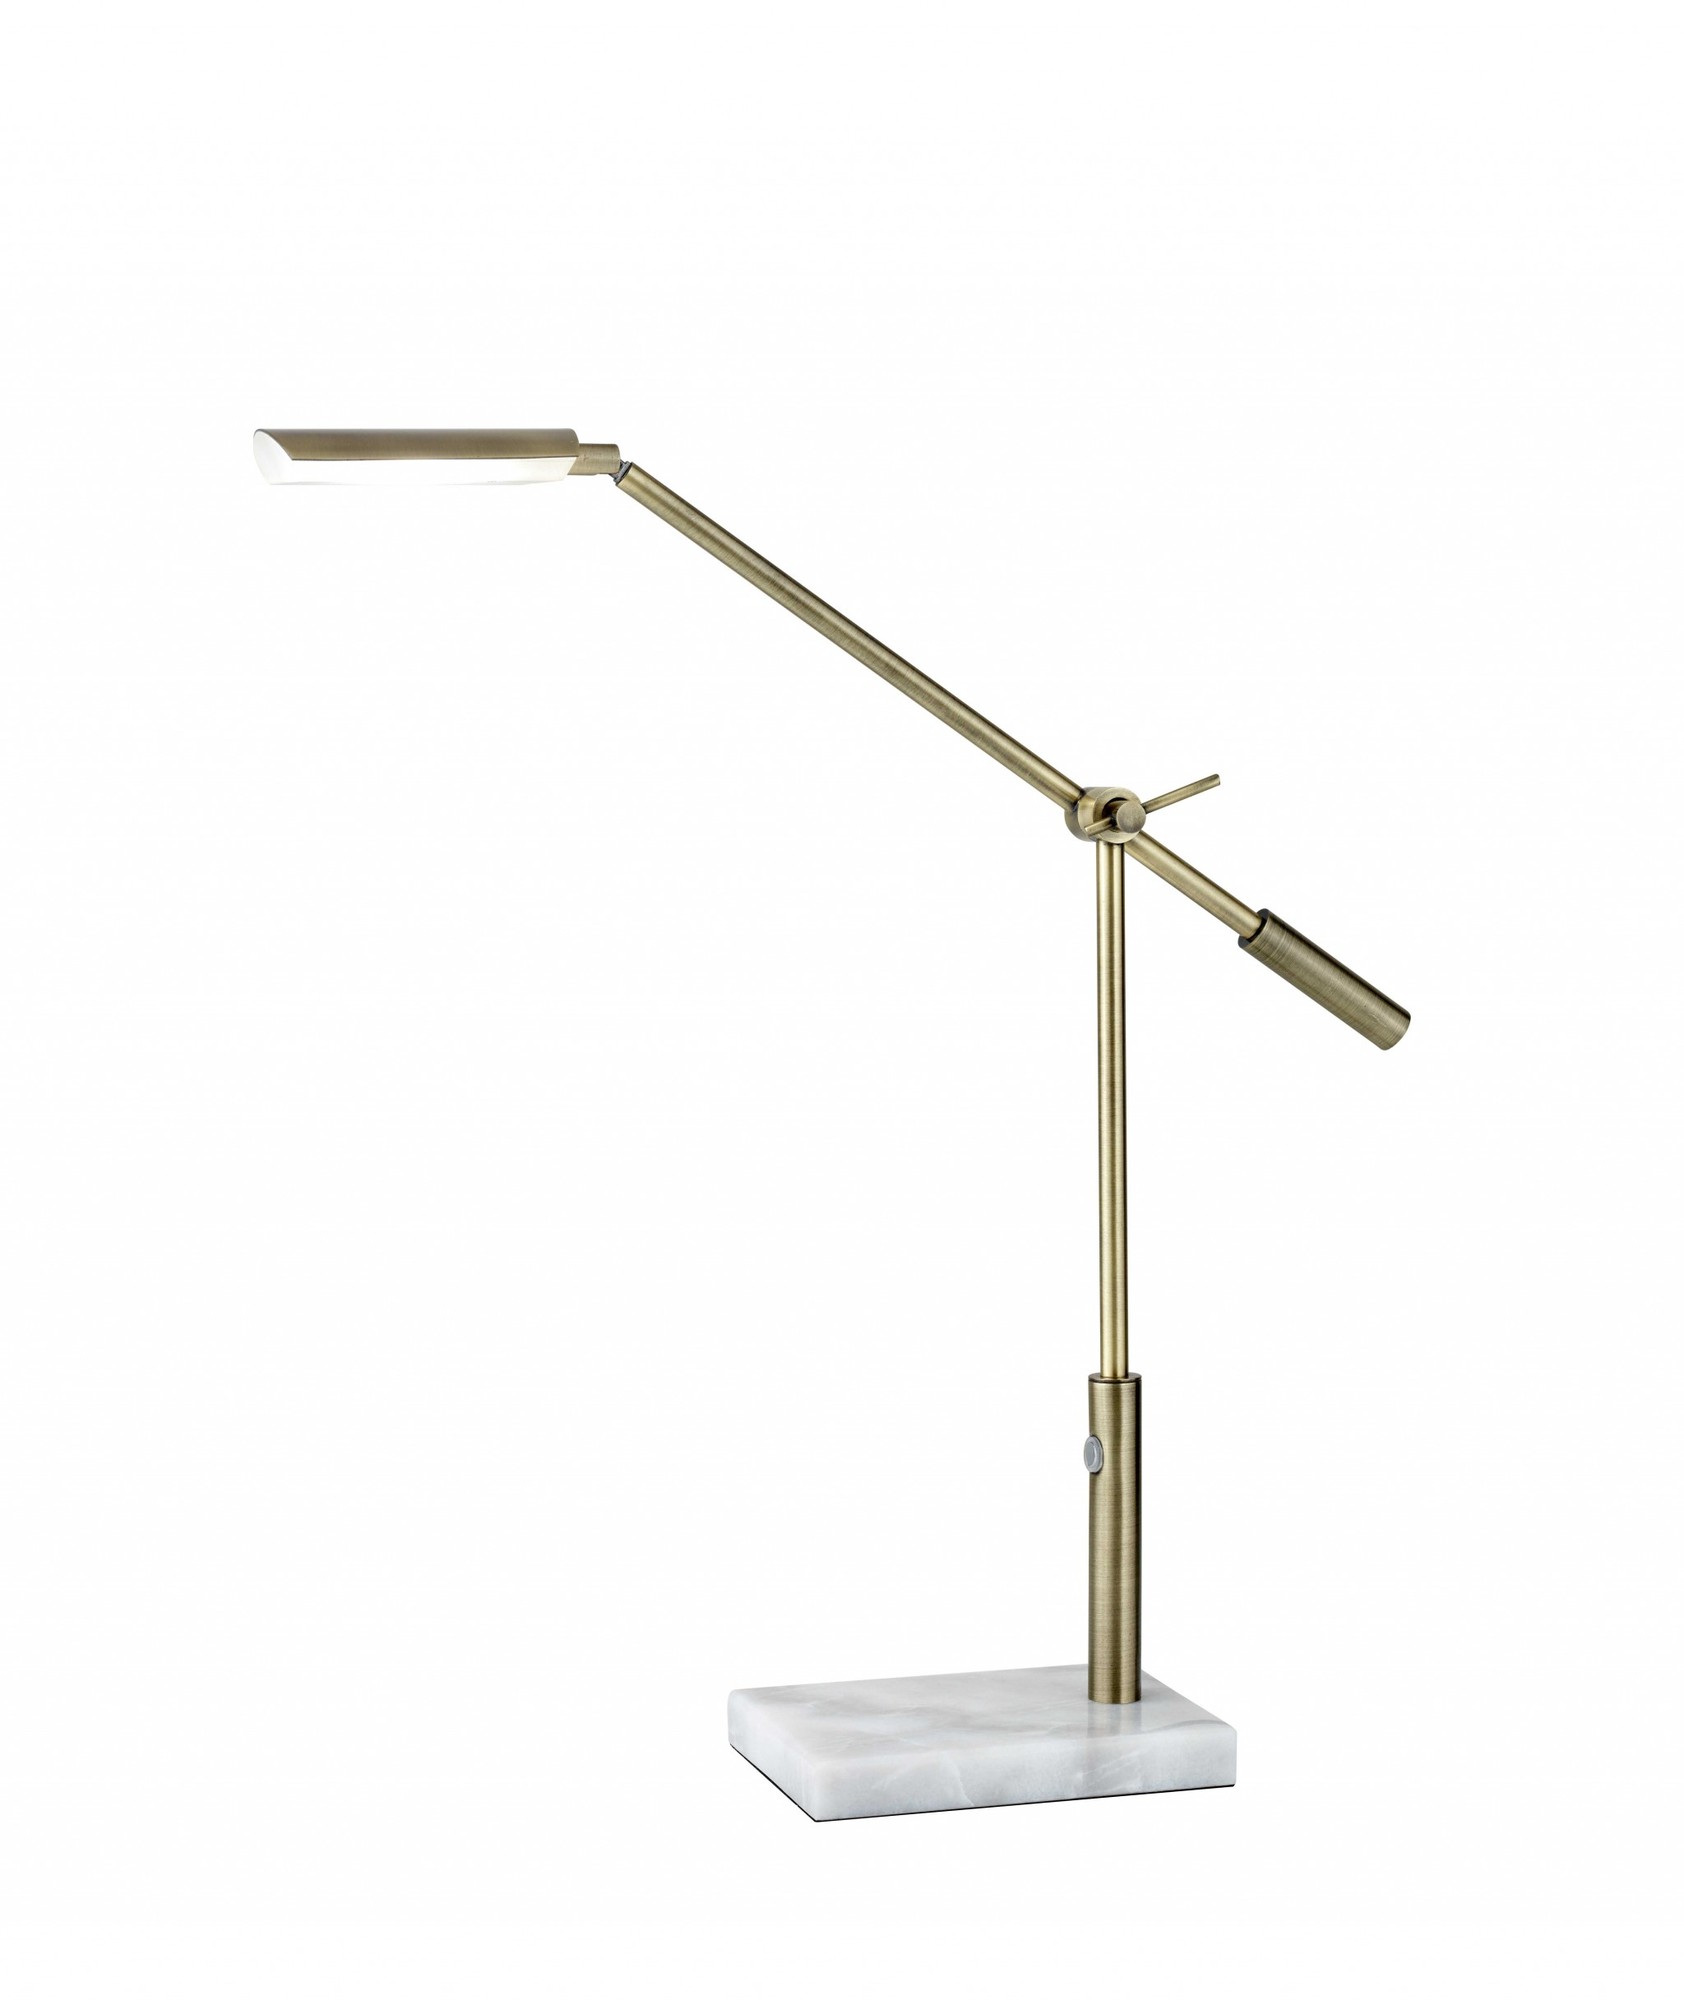 5" X 22" X 16" - 26" Brass Metal LED Desk Lamp